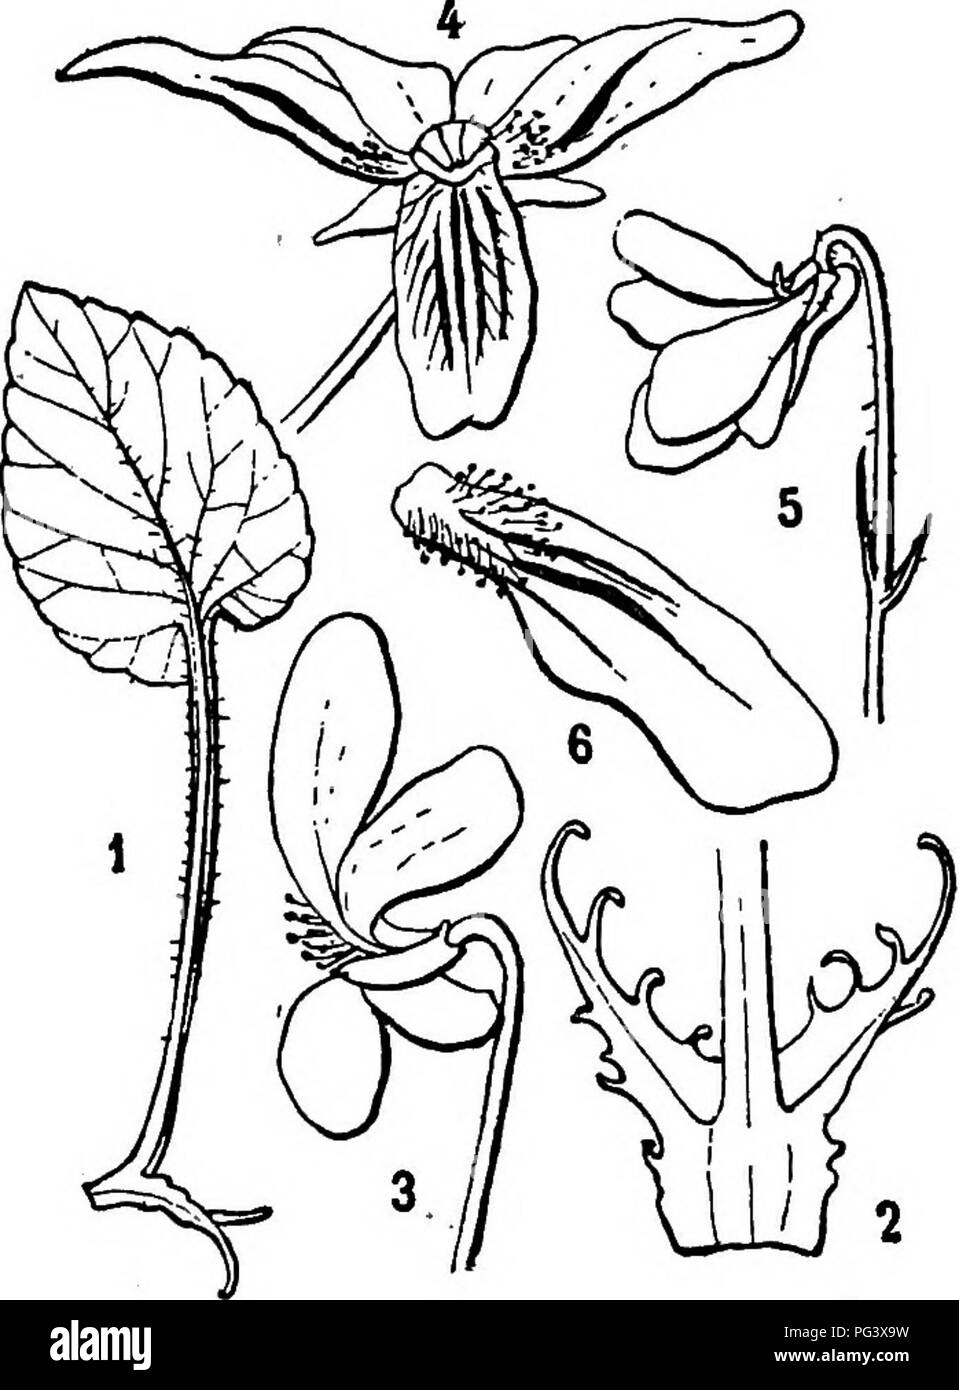 . Icones plantarum formosanarum non nec ad floram contributiones et formosanam ; ou, de l'Icones de Formosa, les plantes et les matériaux pour une flore de l'île, basé sur une étude de la collection de l'étude botanique du gouvernement de Formosa. La botanique. cuspidiformibus oTatis obliquis basi aquilonia mar- gine fimbriatisii 8 mm. longis 3 mm. lati&amp ;, stipuKs hirsutis extus' foliorum stolonis angustioribus dentato-ciliolatis margine. Scapi 5-7 cm. longi, sursum bracteis 2 instructi, bracteis linearibus 6 mm. longis | mm. latis margine ciliatis hirsutis glabris dorso, intus. Hachemi dulcis, inseq Banque D'Images